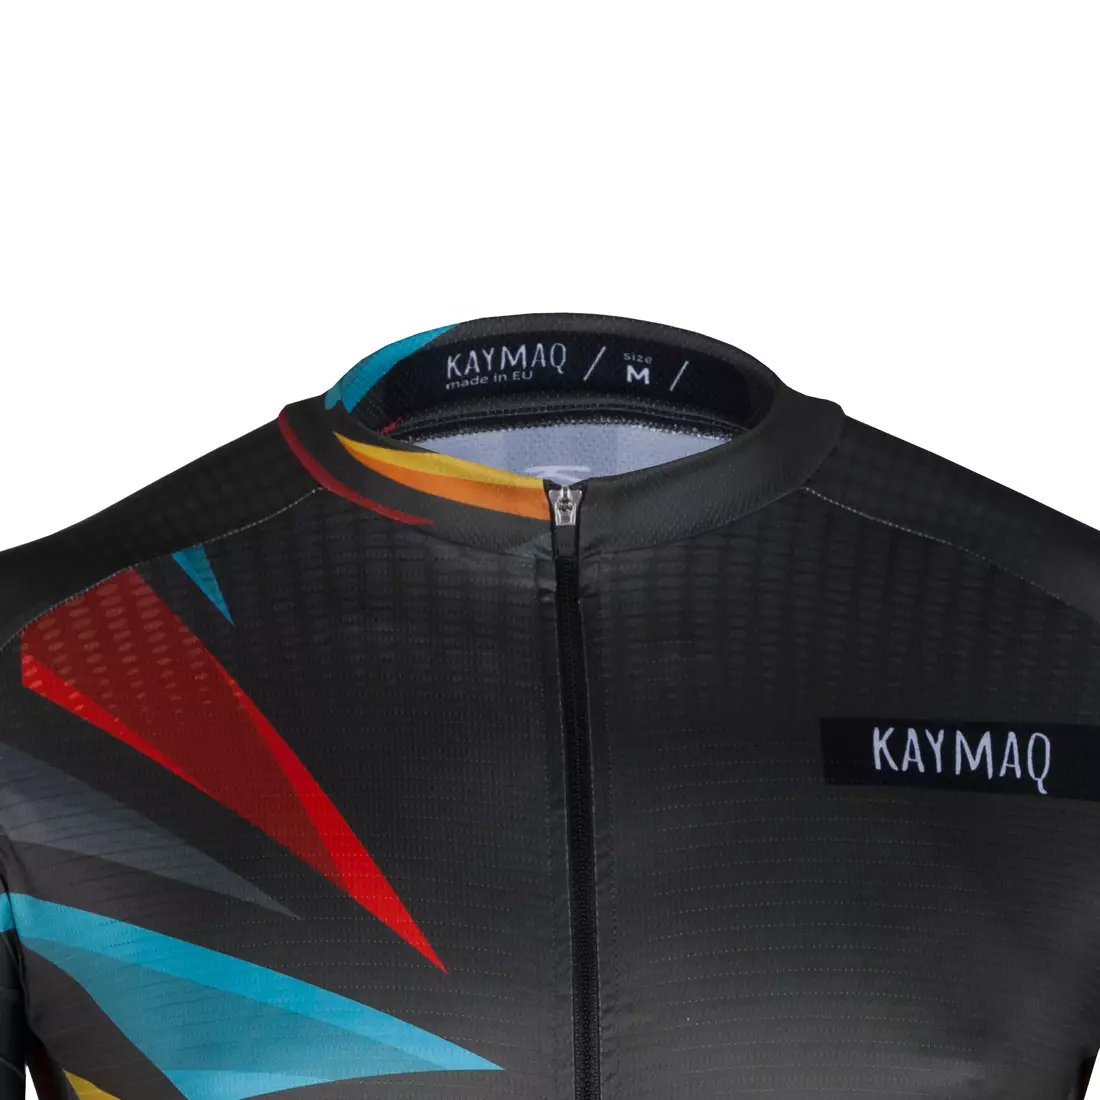 KAYMAQ M47 RACE men's cycling jersey